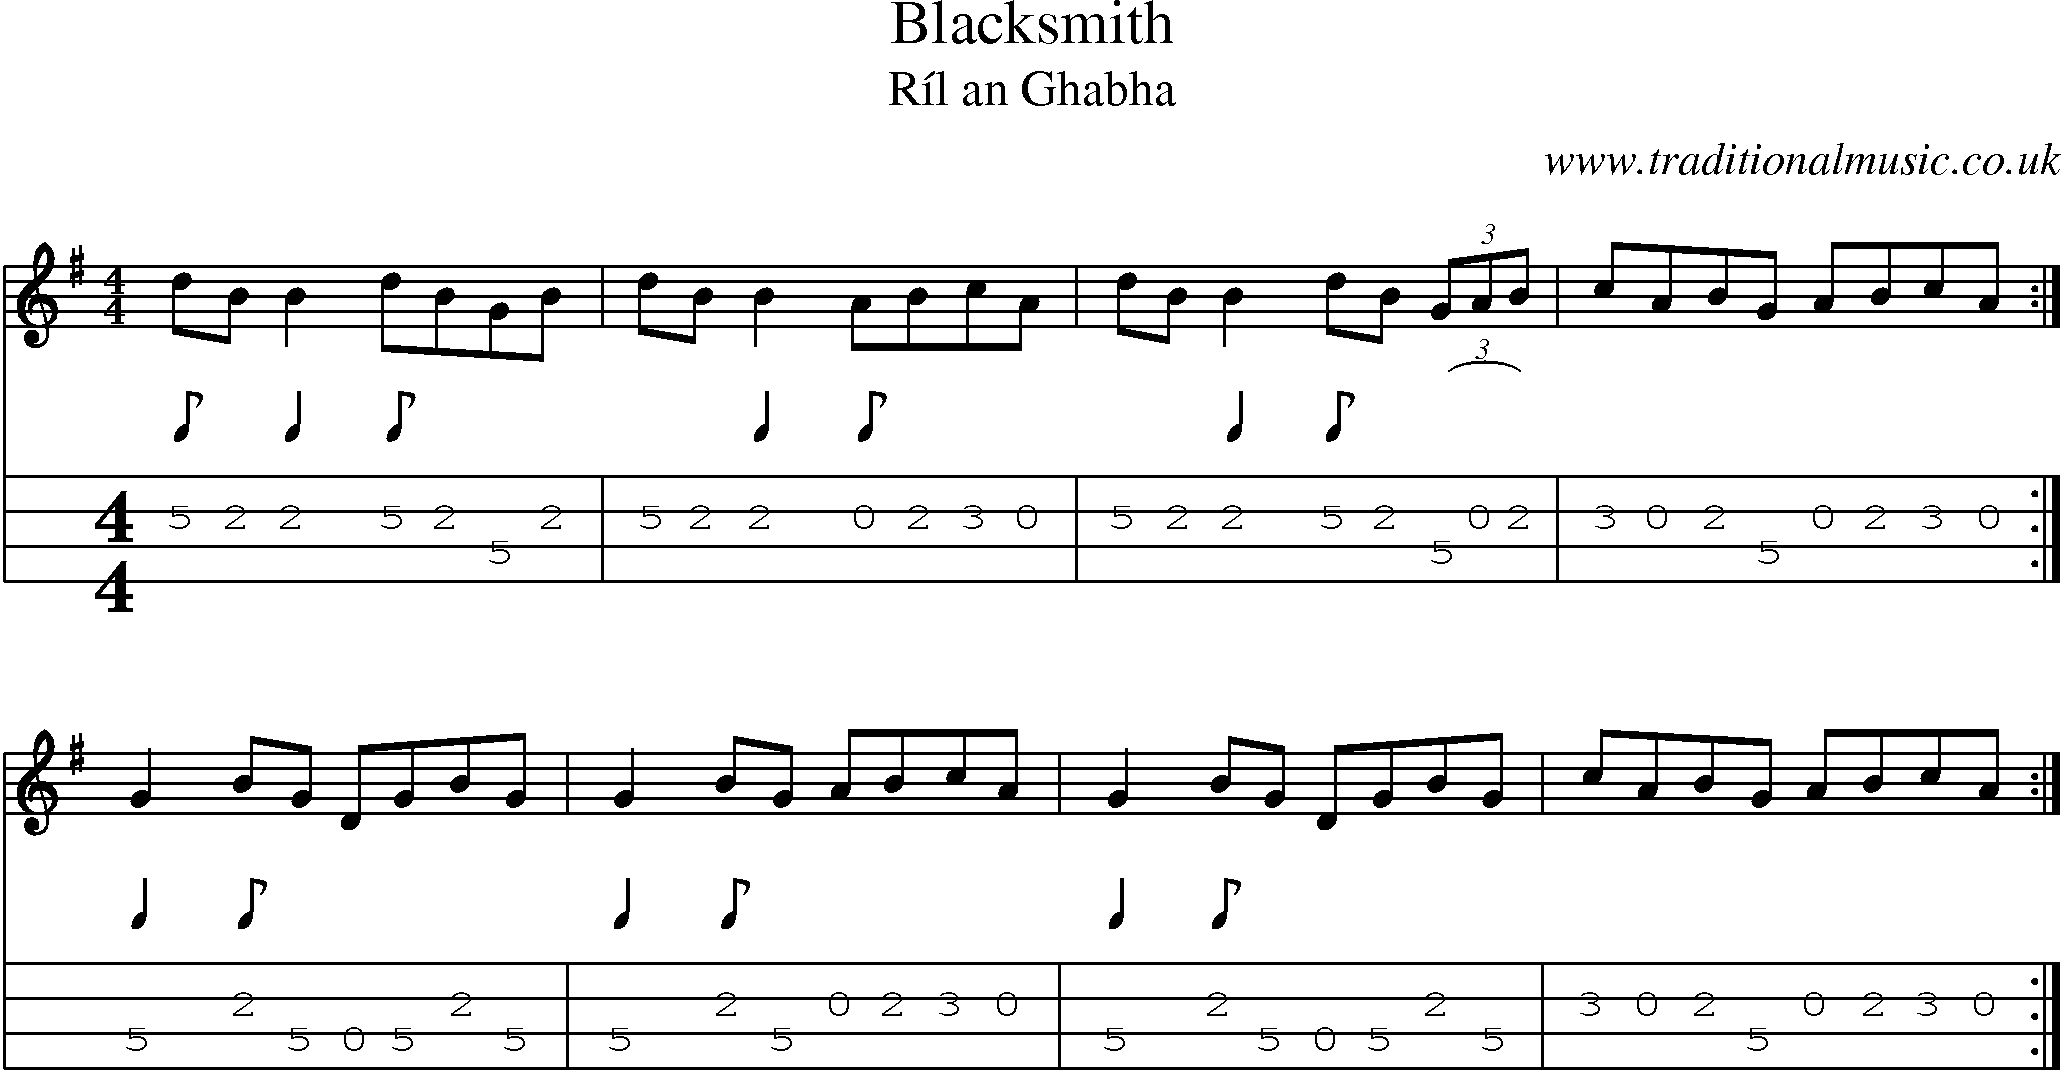 Music Score and Mandolin Tabs for Blacksmith